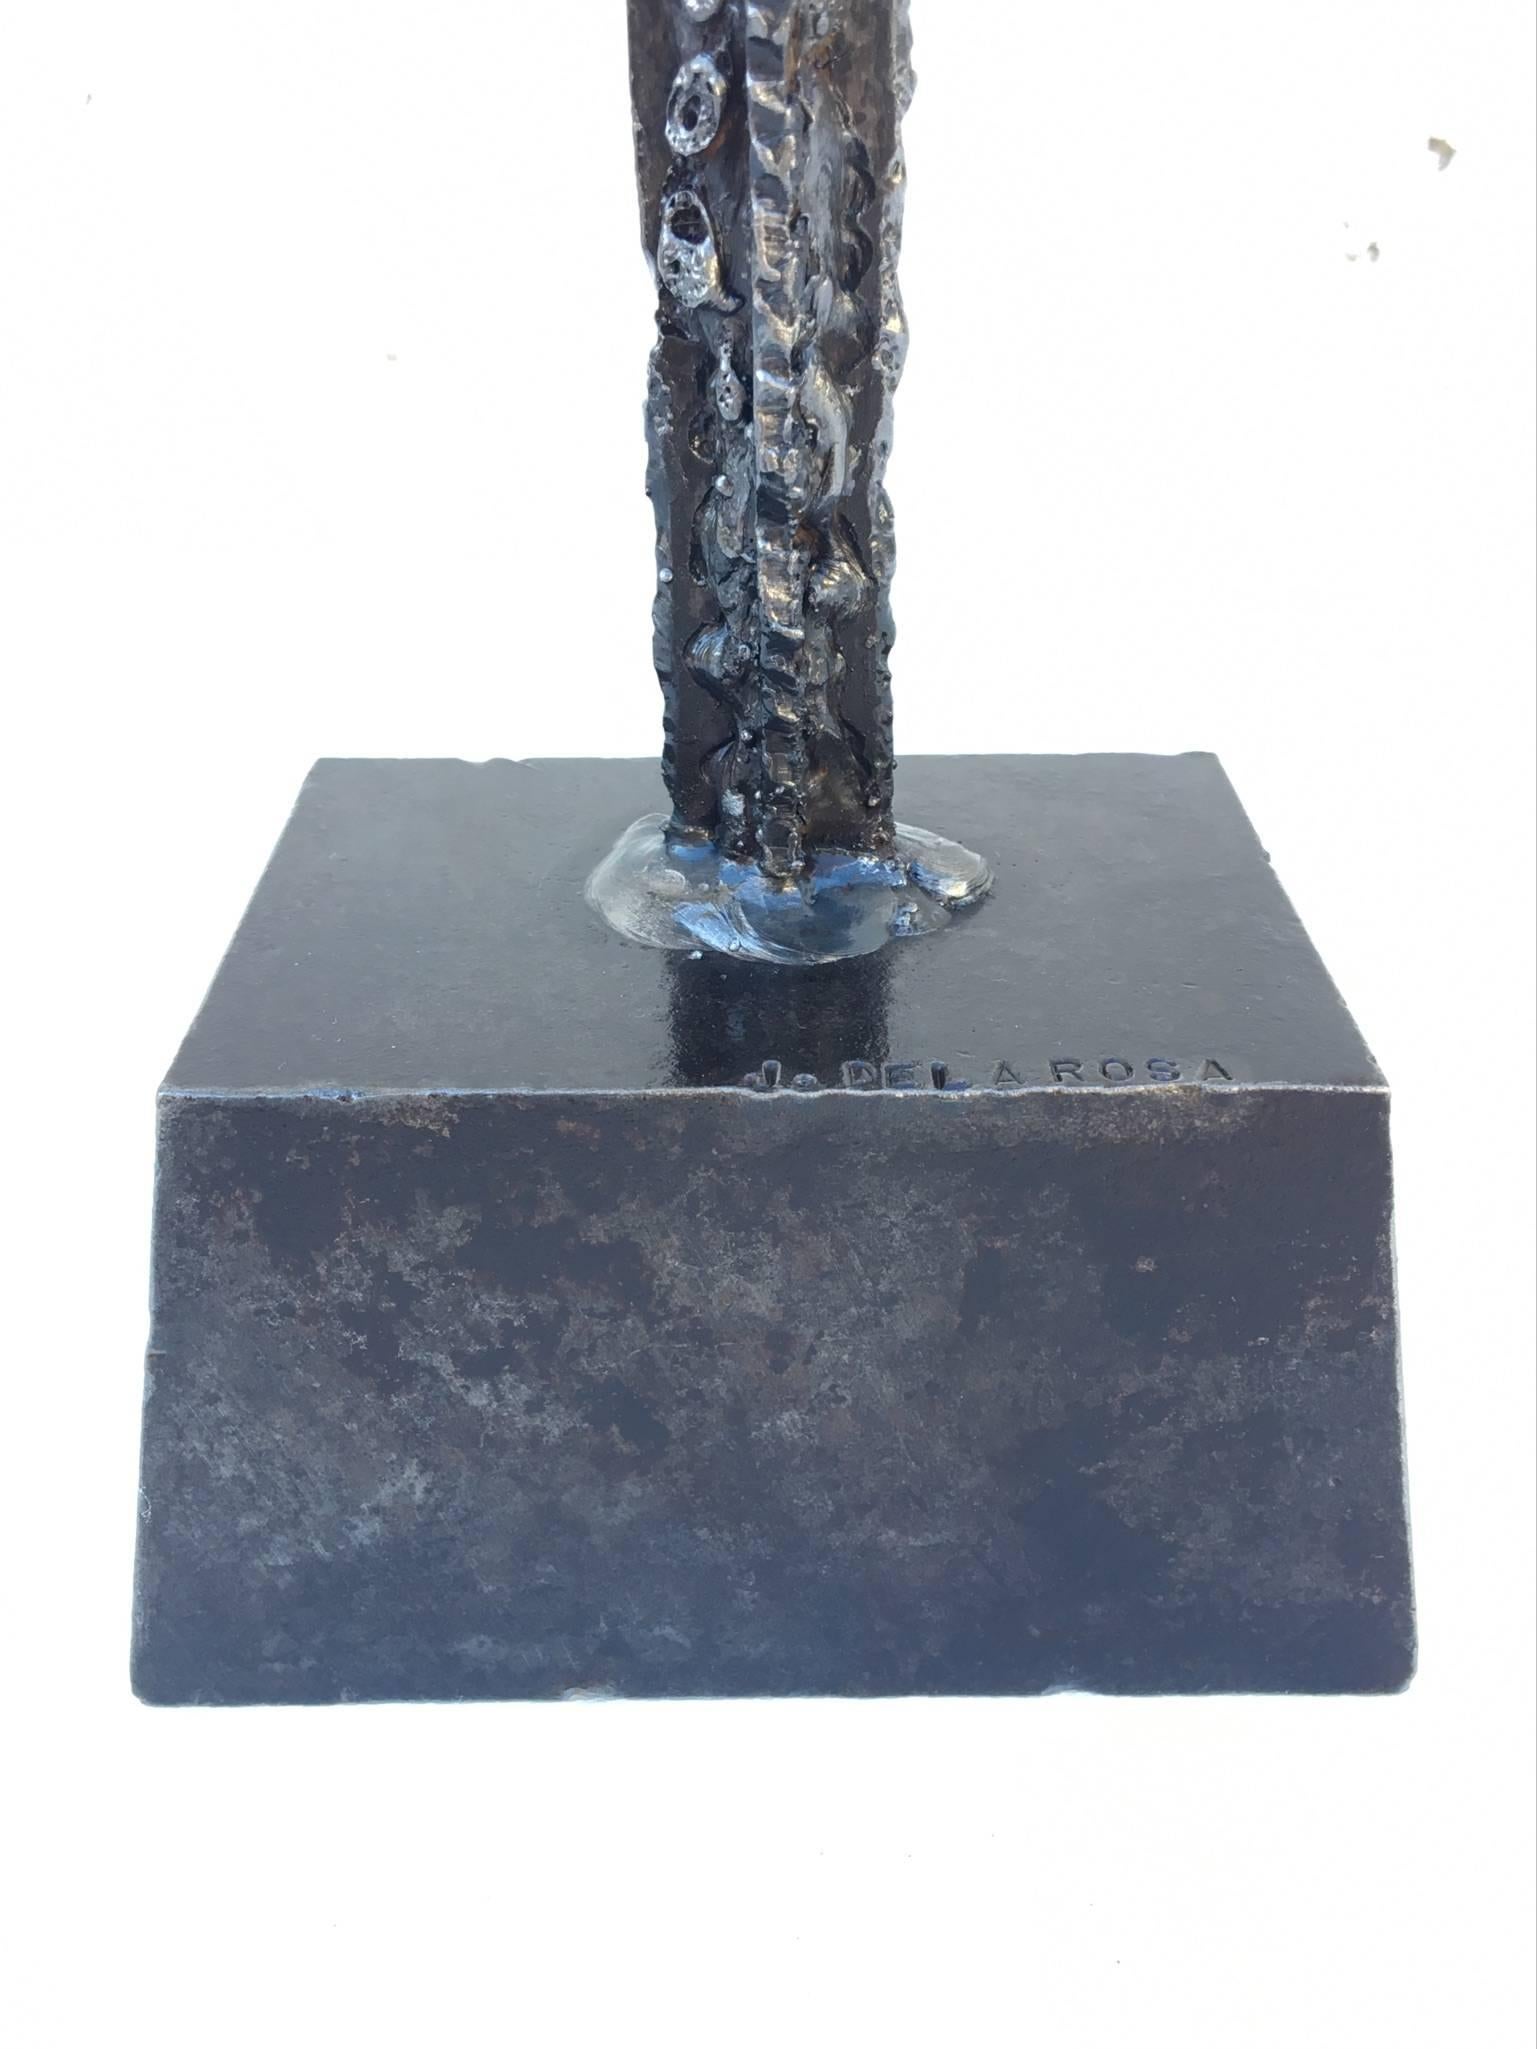 Wrought Iron Brutalist Studio Sculpture by John De La Rosa